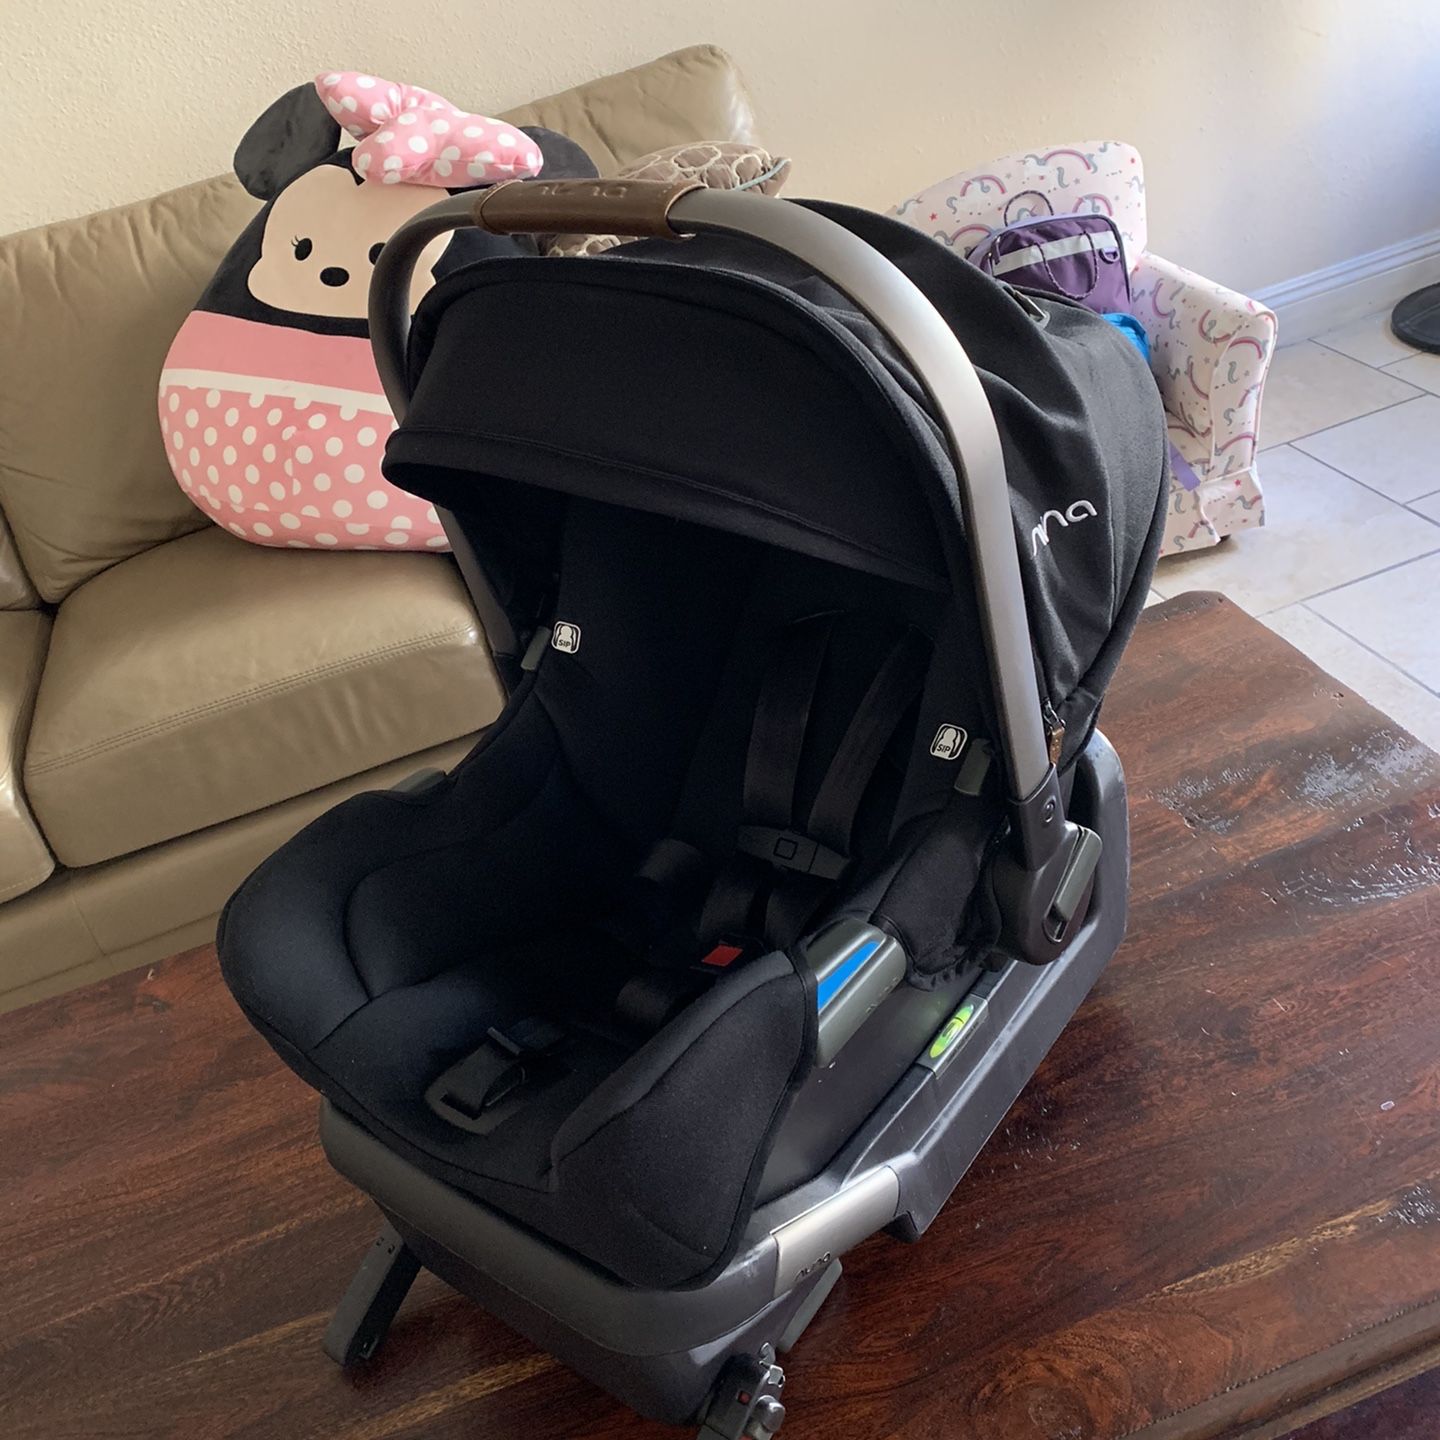 Gently used Nuna Mixx2 infant car seat and base.